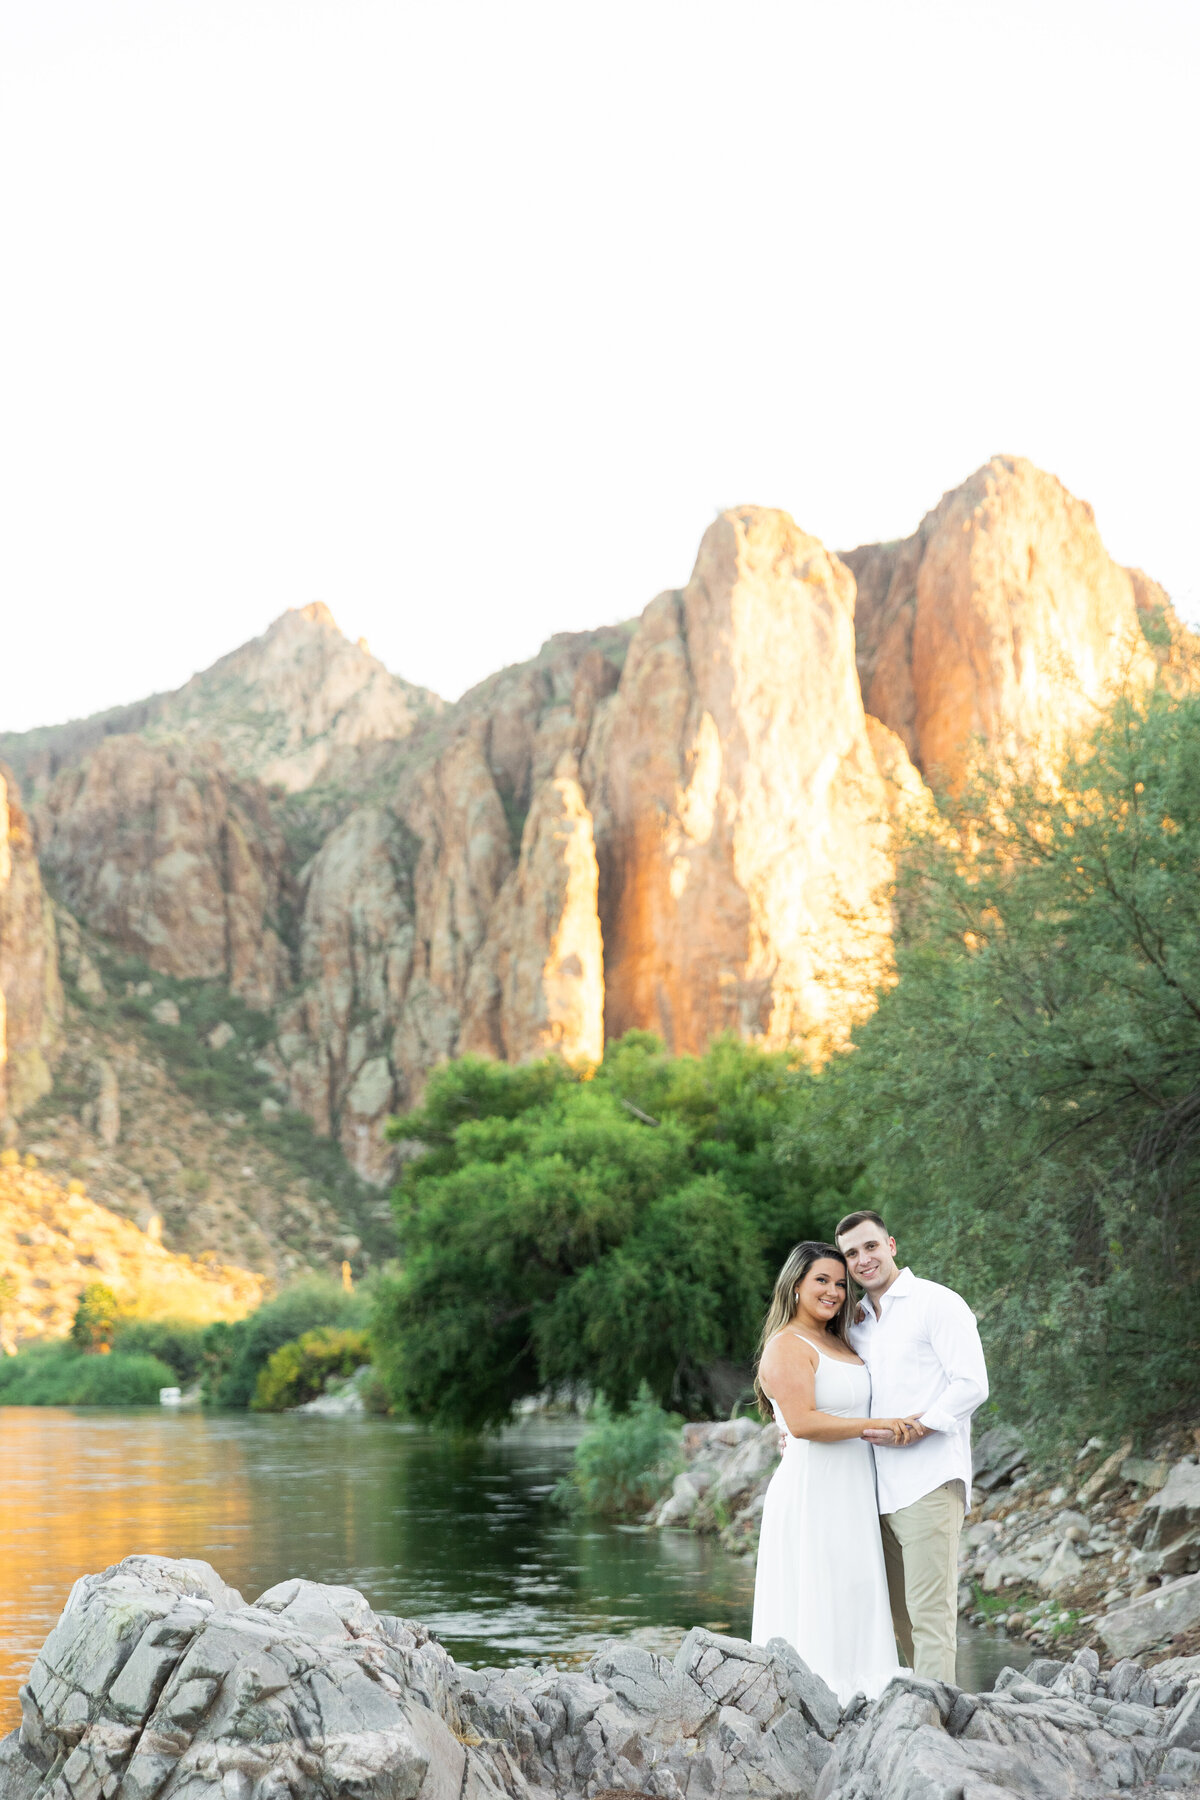 Karlie Colleen Photography - Kaitlyn & Cristian Engagement Session - Salt River Arizona-281